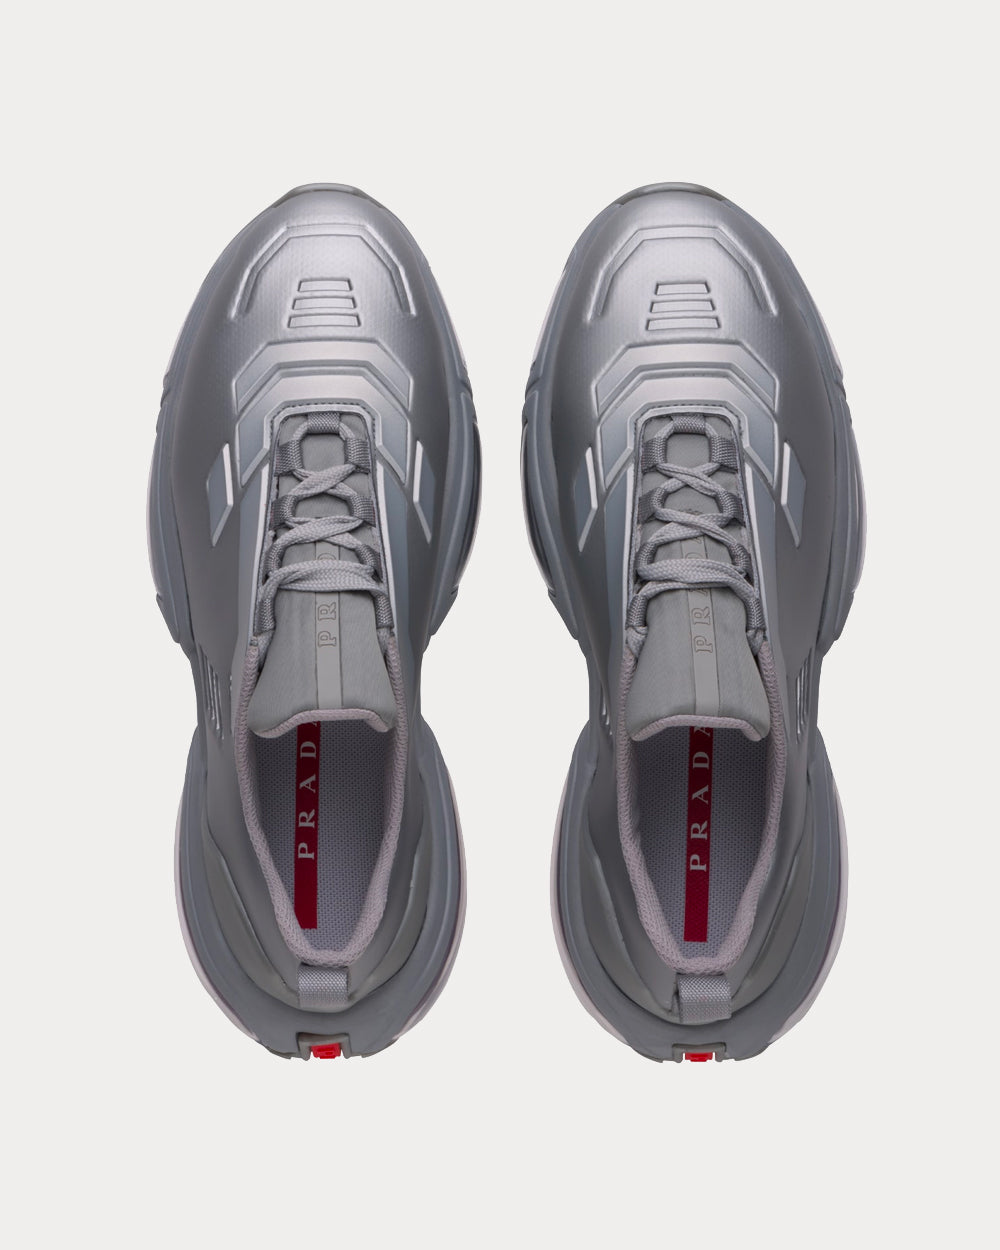 Prada - Collision Technical Fabric Grey Low Top Sneakers